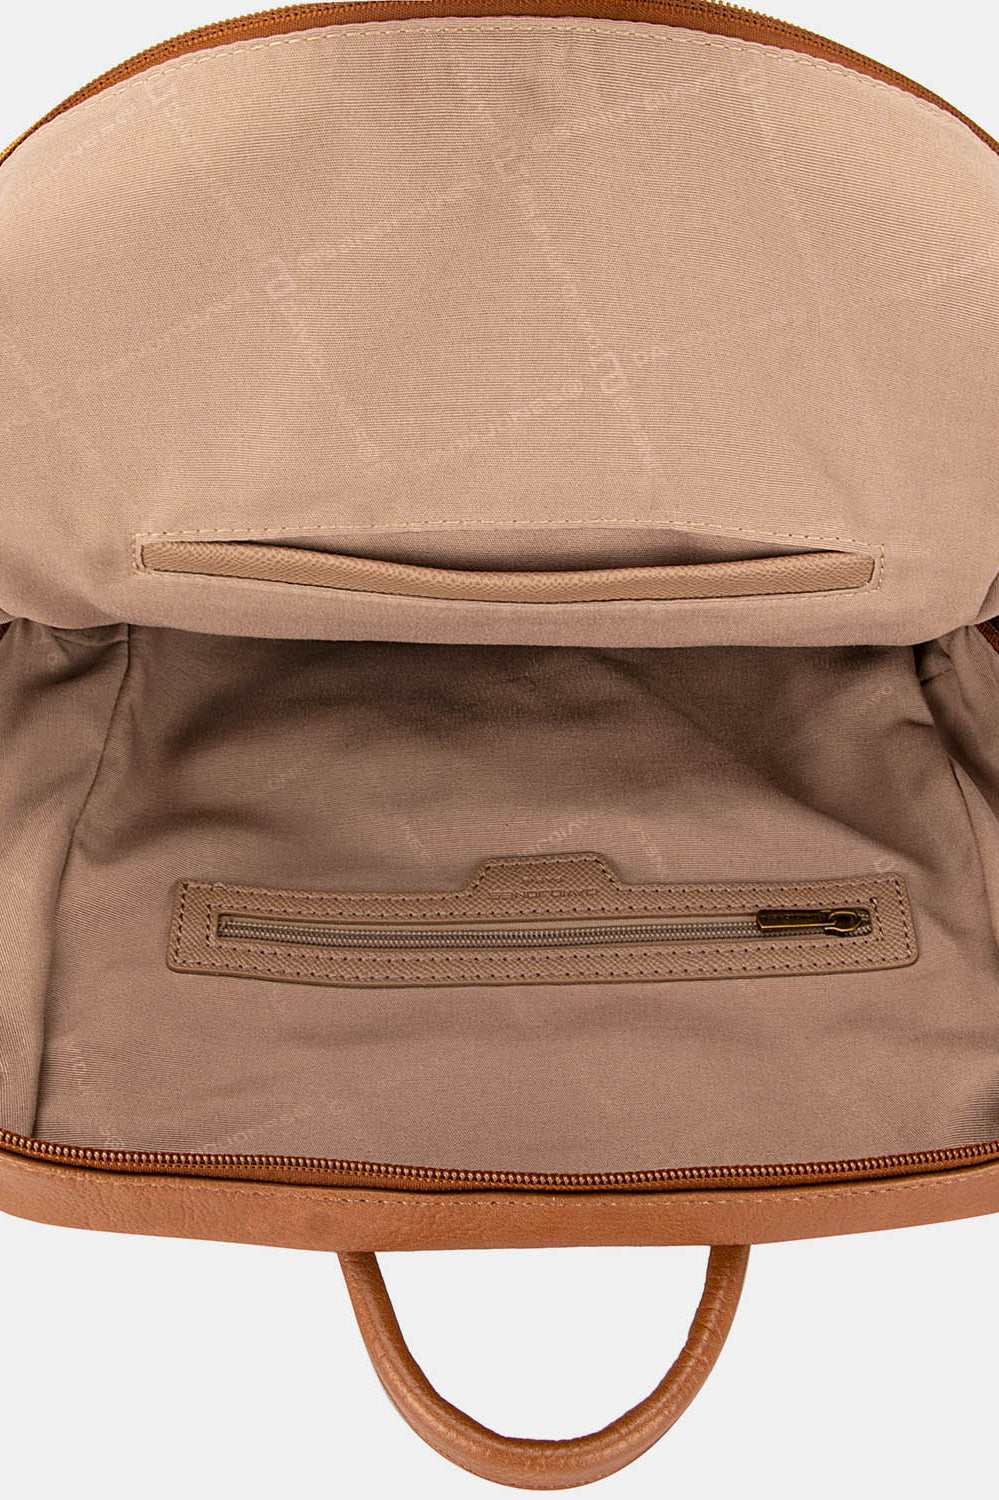 David Jones PU Leather Backpack Bag Trendsi